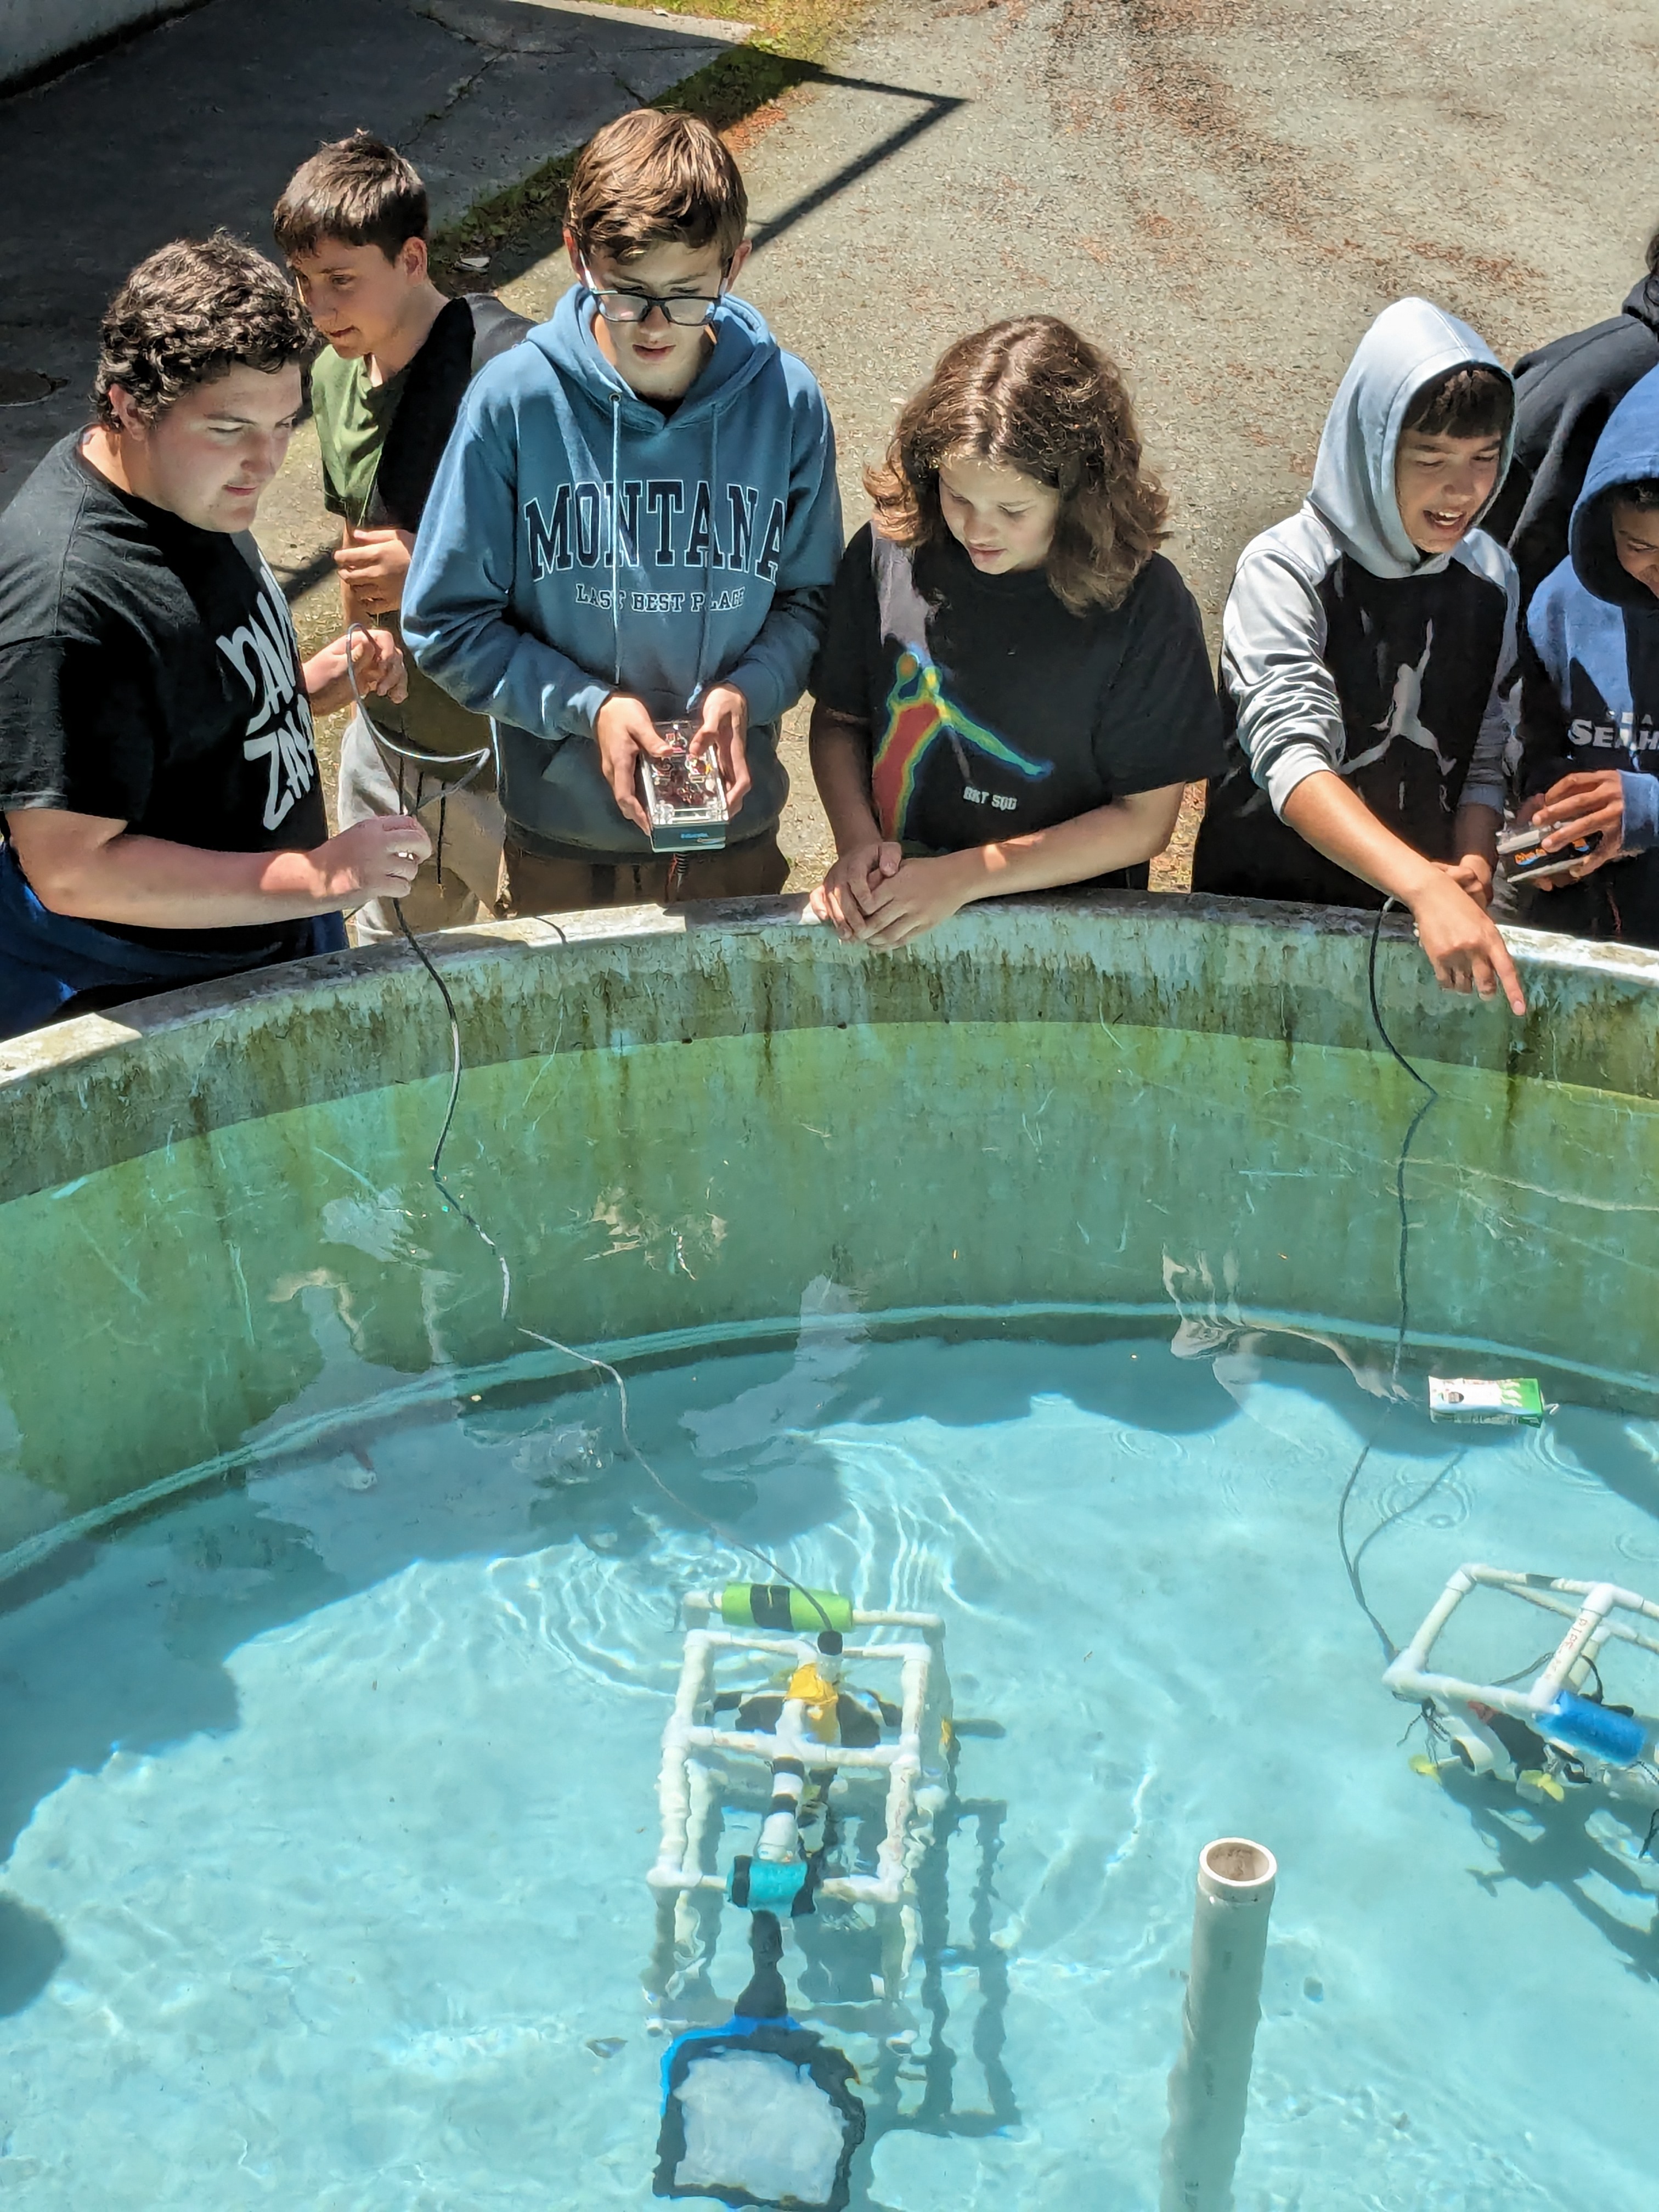 Kids test underwater vehicle in water tank